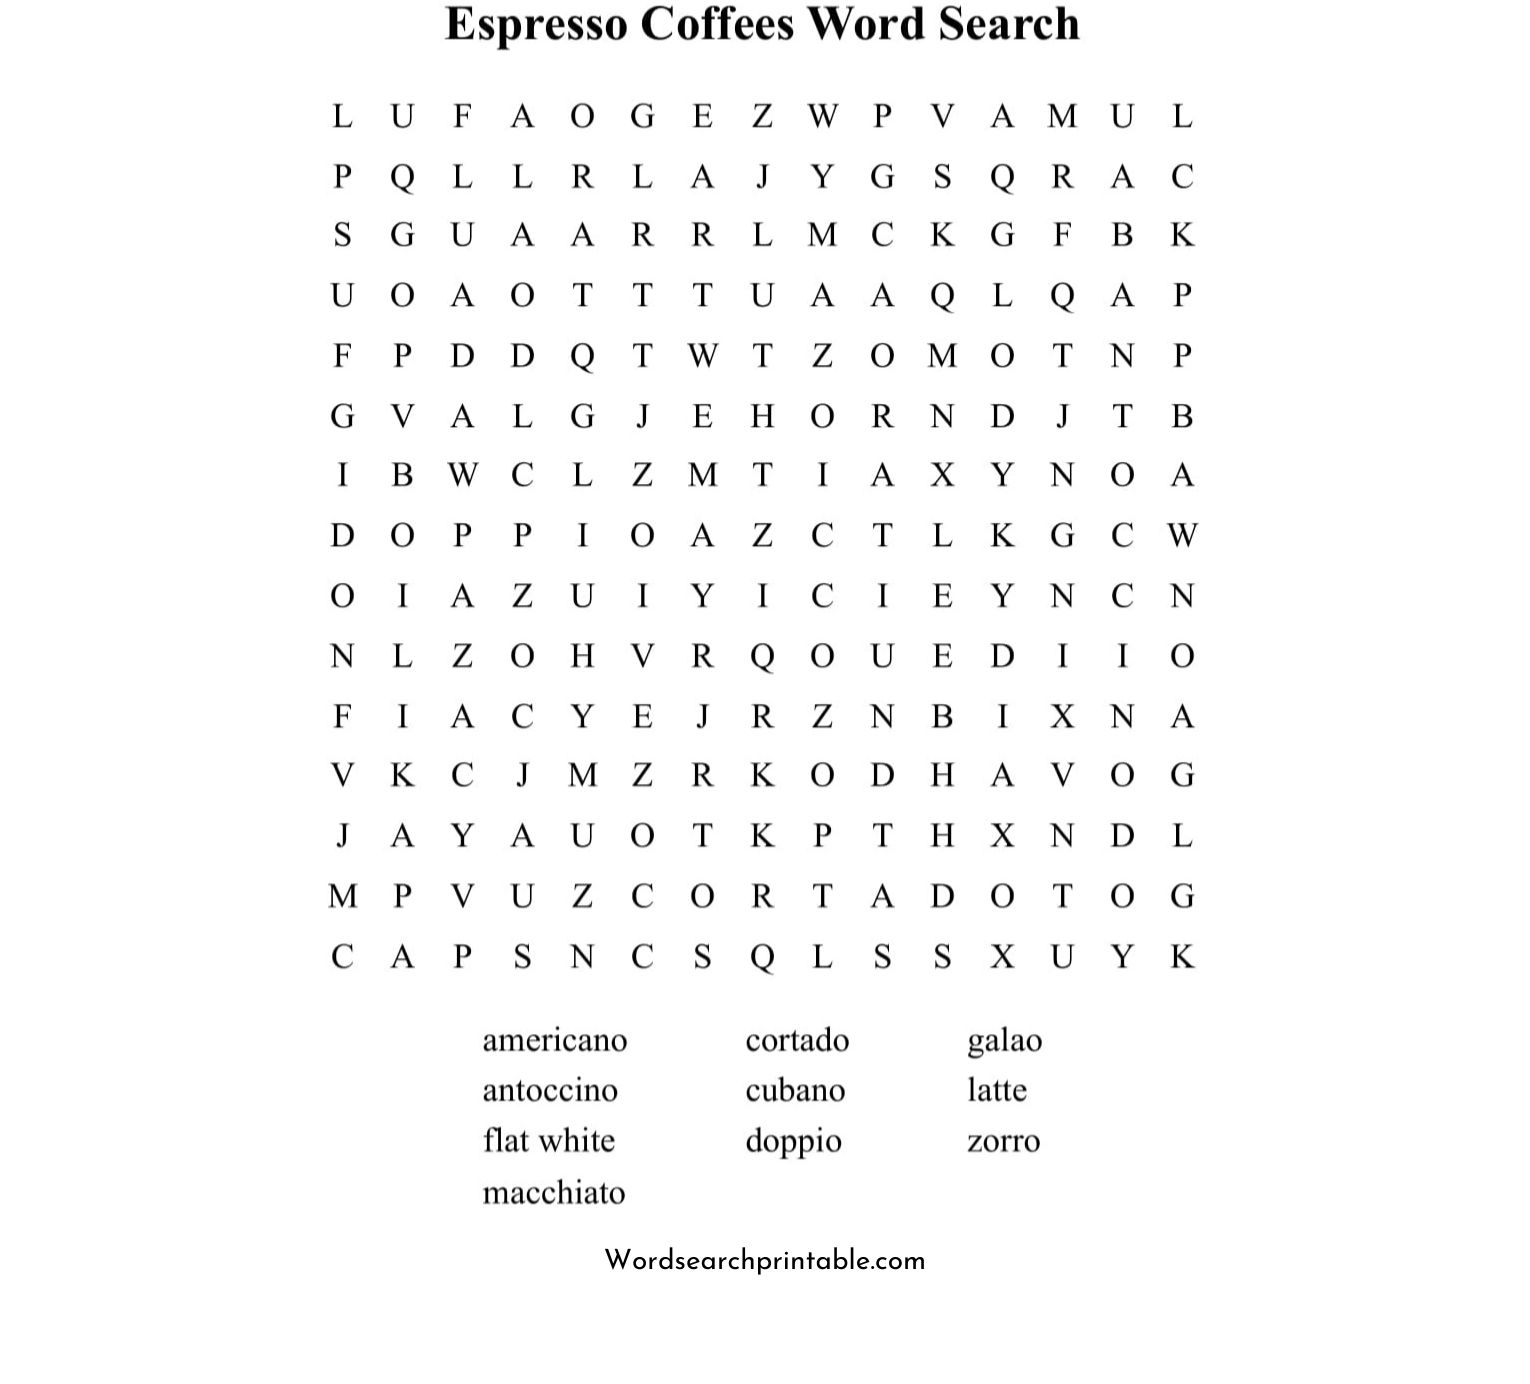 espresso coffees word search puzzle